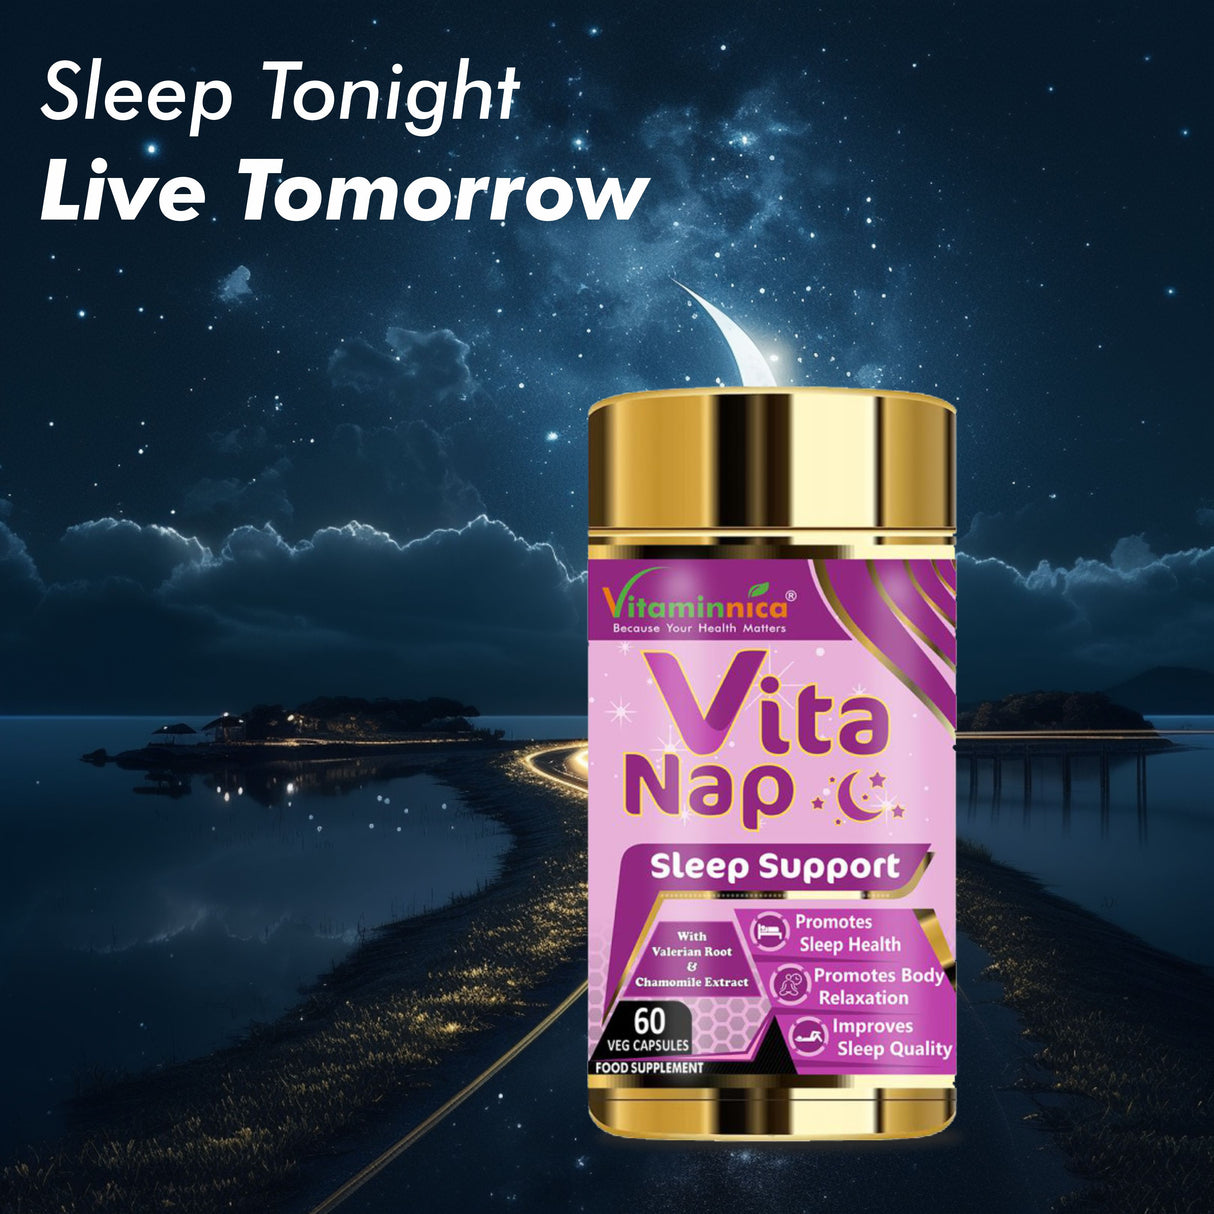 Vitaminnica Vita Nap- Natural Sleep Support- 60 Capsules